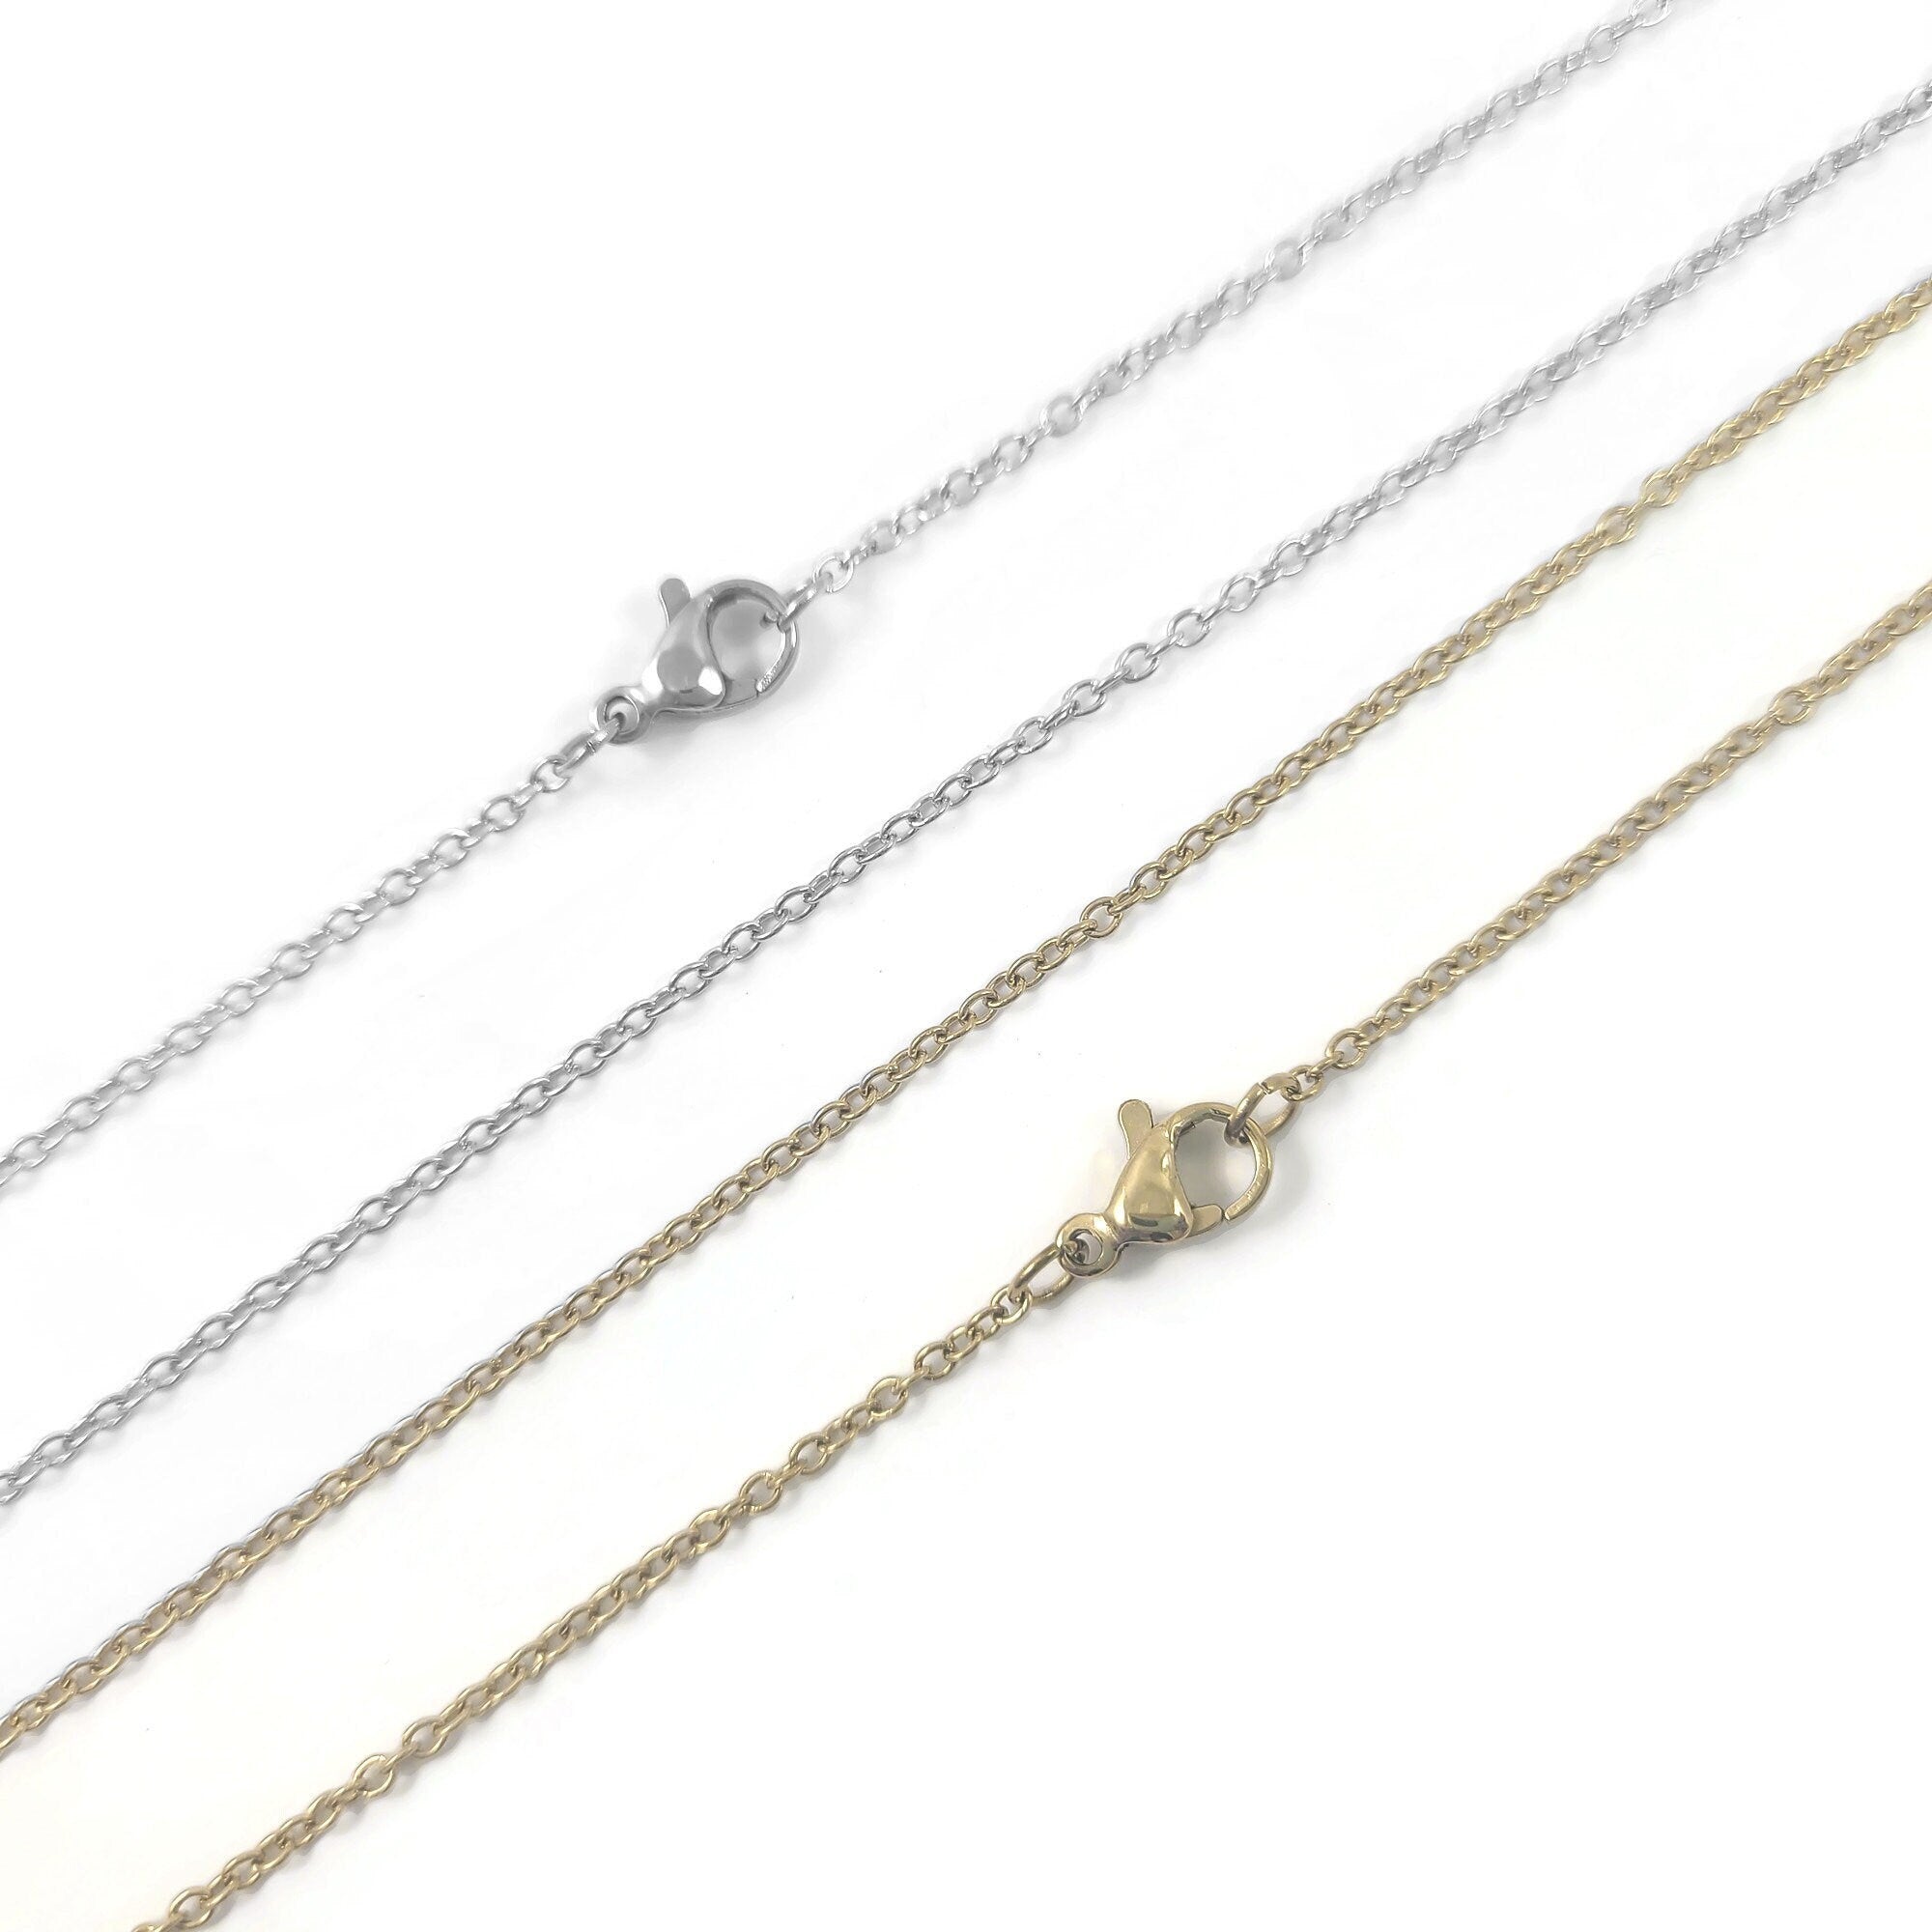  Bracelet Extender White Gold Plated Solid Brass Adjustable  Slider Necklace Bracelet Extenders Extension Chains for Necklaces（1 2 3  inch） : Arts, Crafts & Sewing